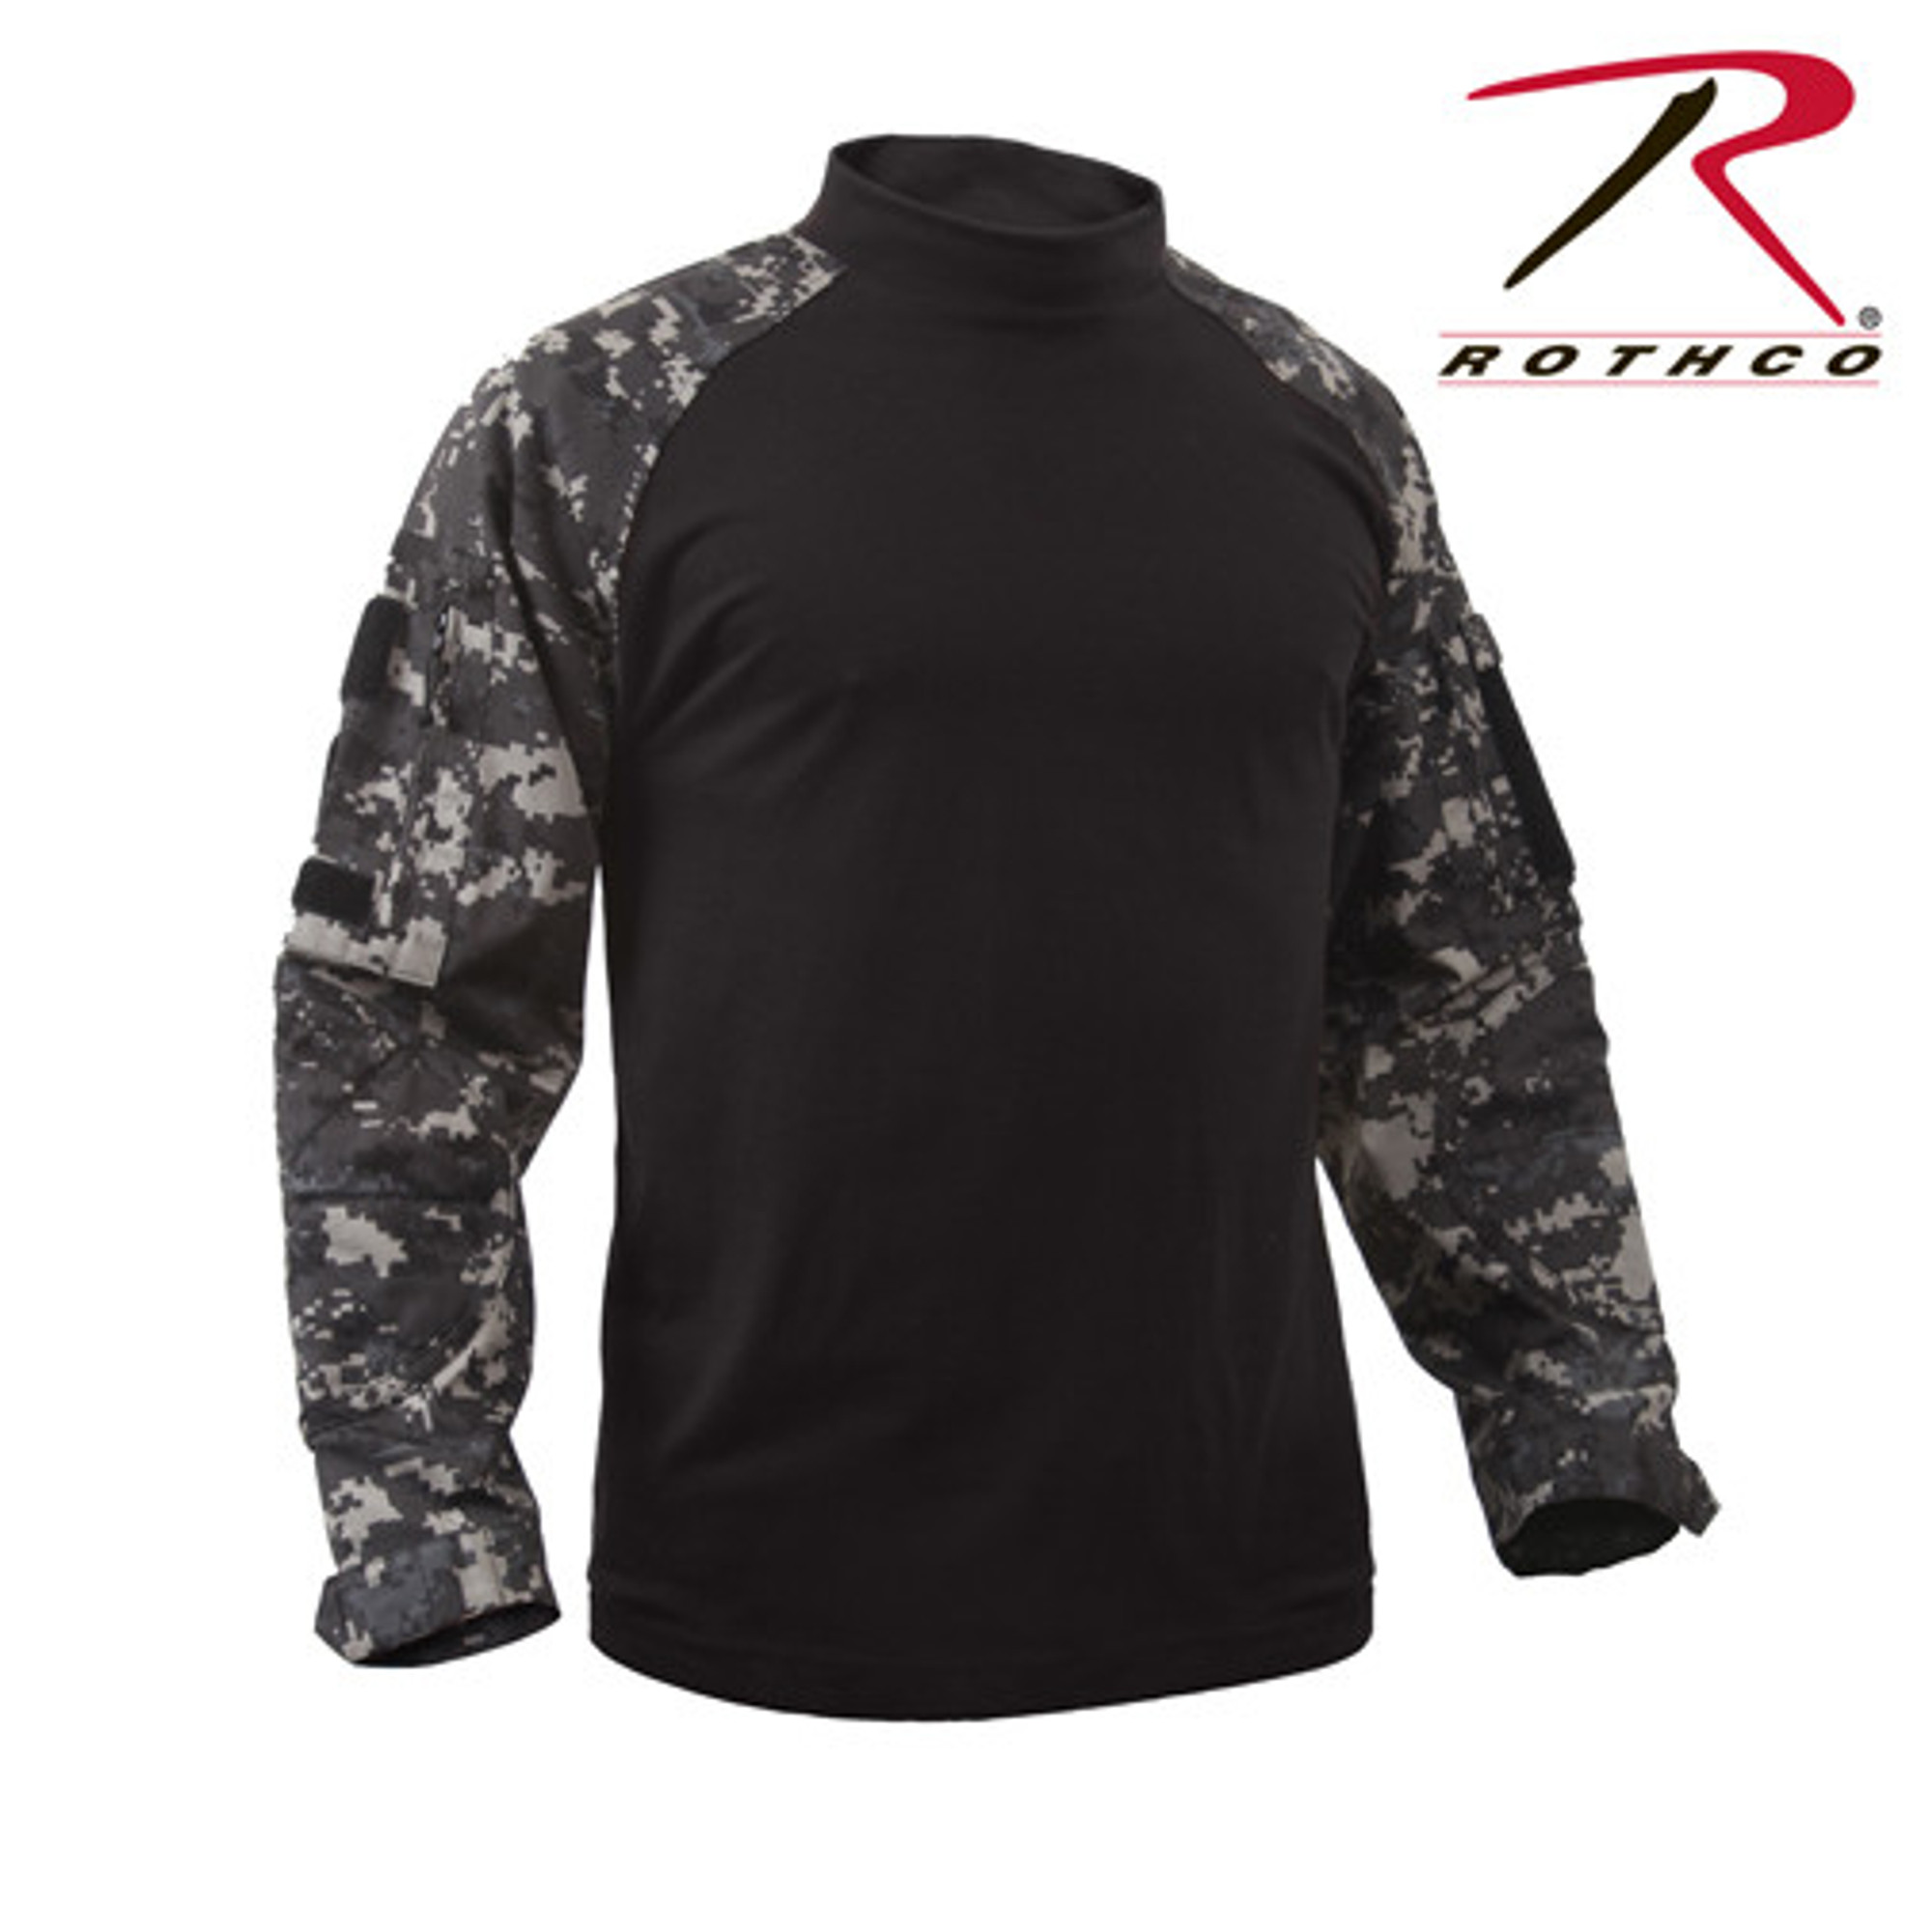 Rothco Military NYCO FR Fire Retardant Combat Shirt - Subdued Urban Digital